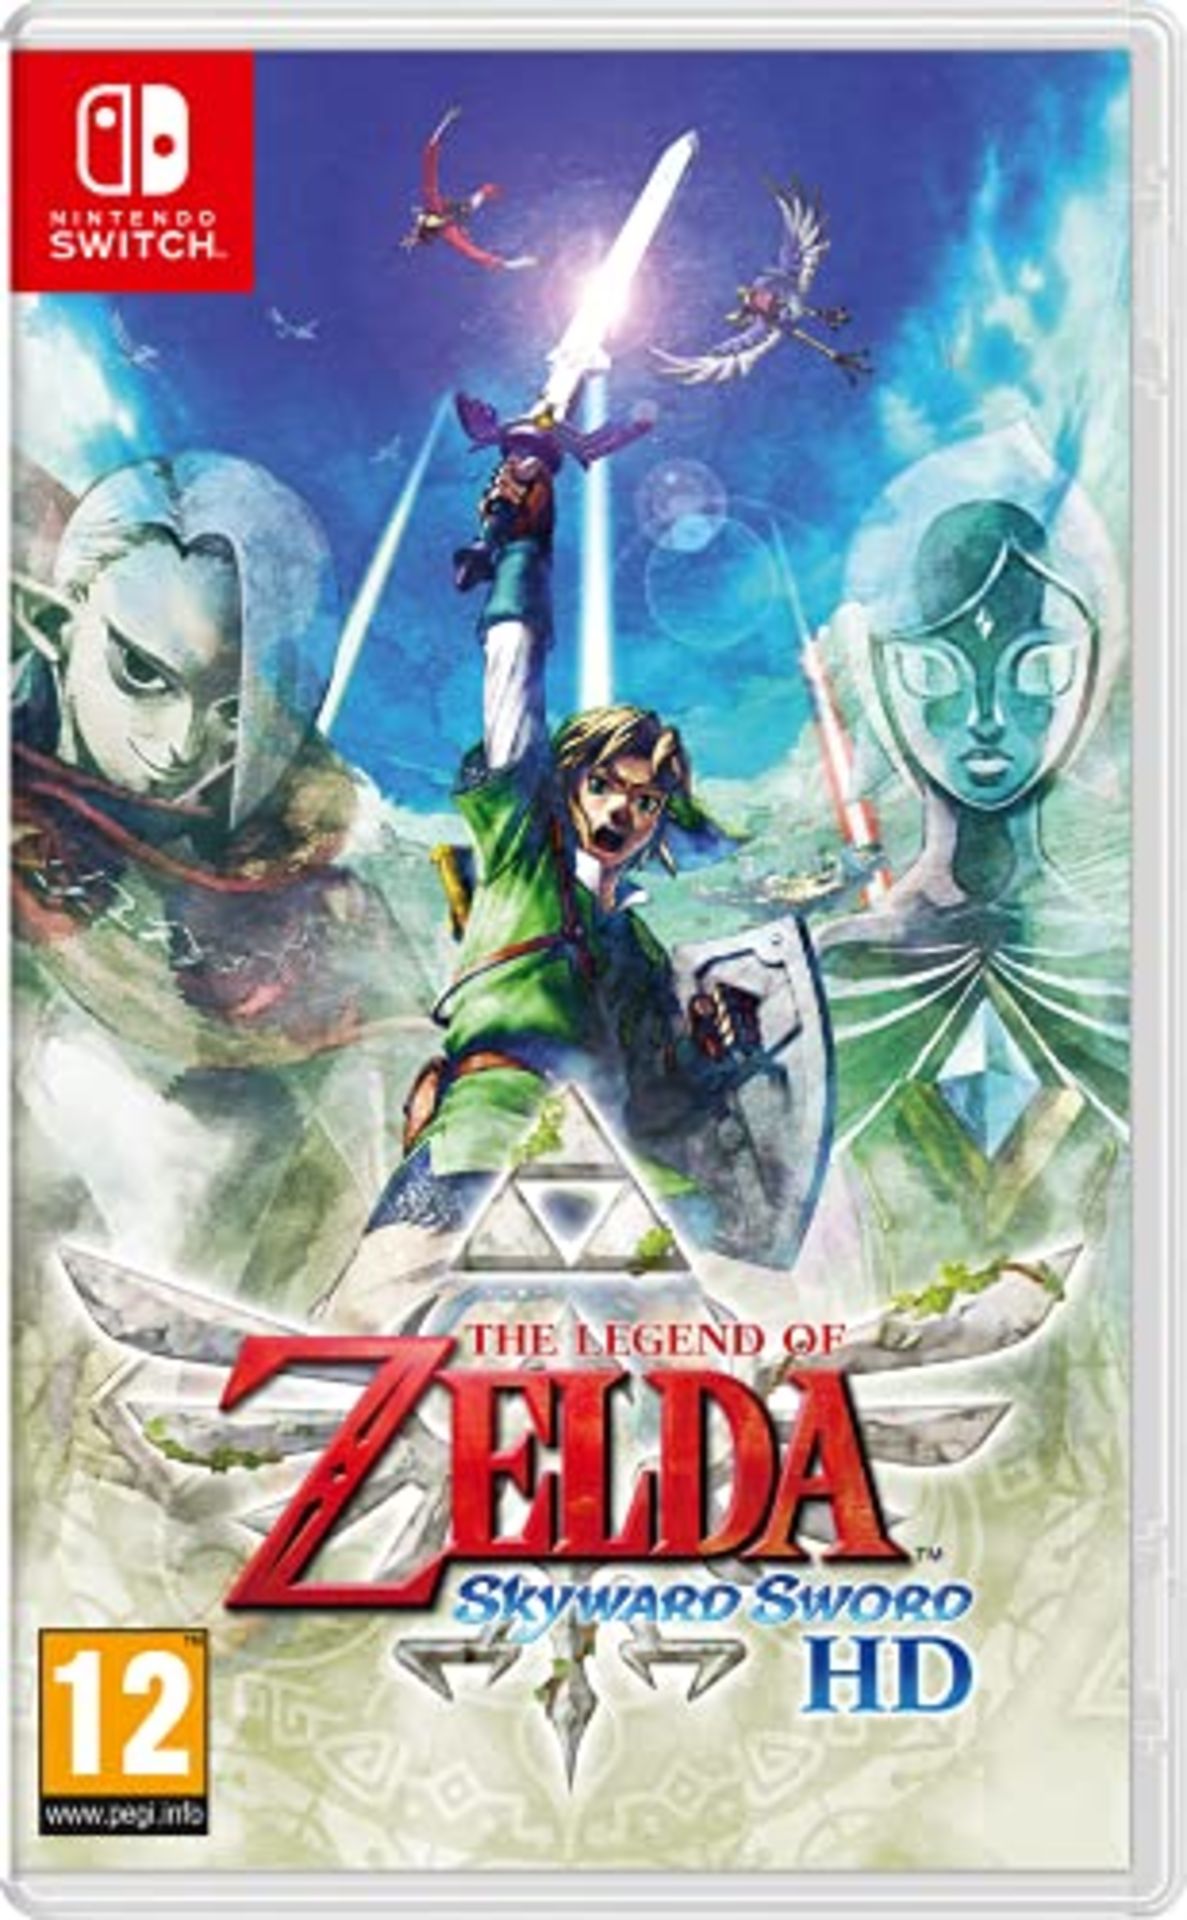 The Legend of Zelda: Skyward Sword - HD - Nintendo Video Game - Italian Edition - Cart